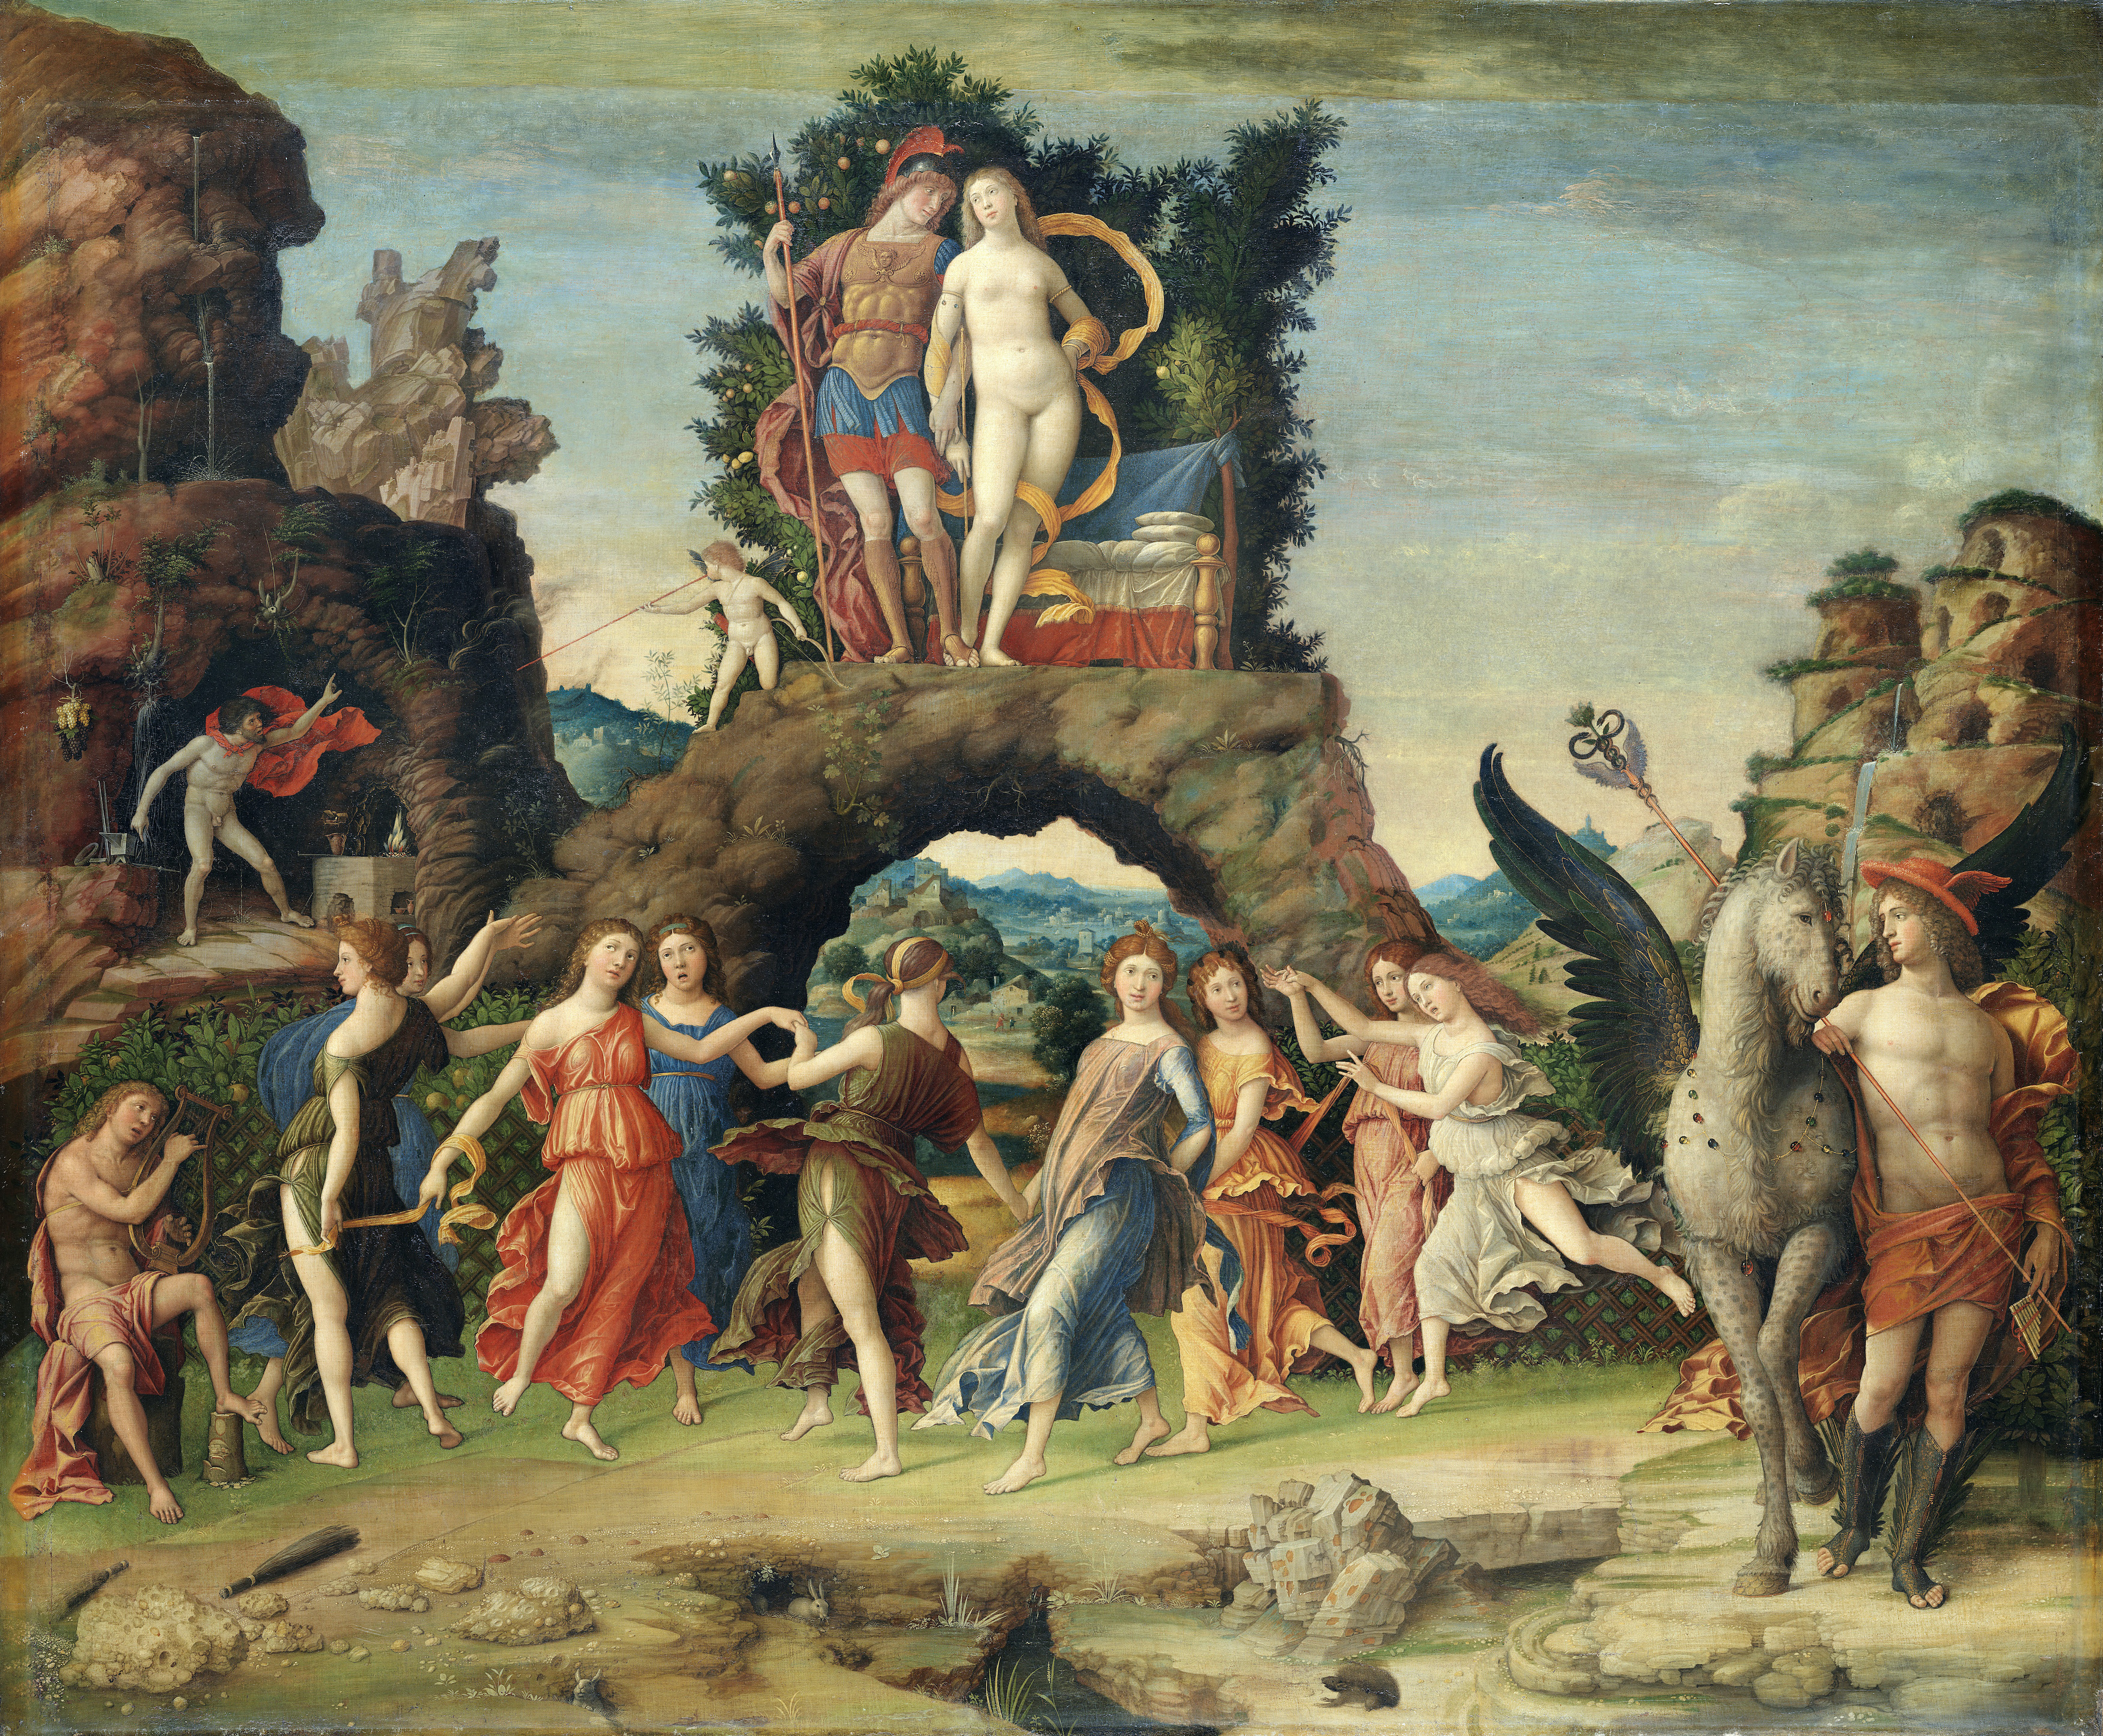 Парнасус by Andrea Mantegna - 1497. - 159 × 192 cm 